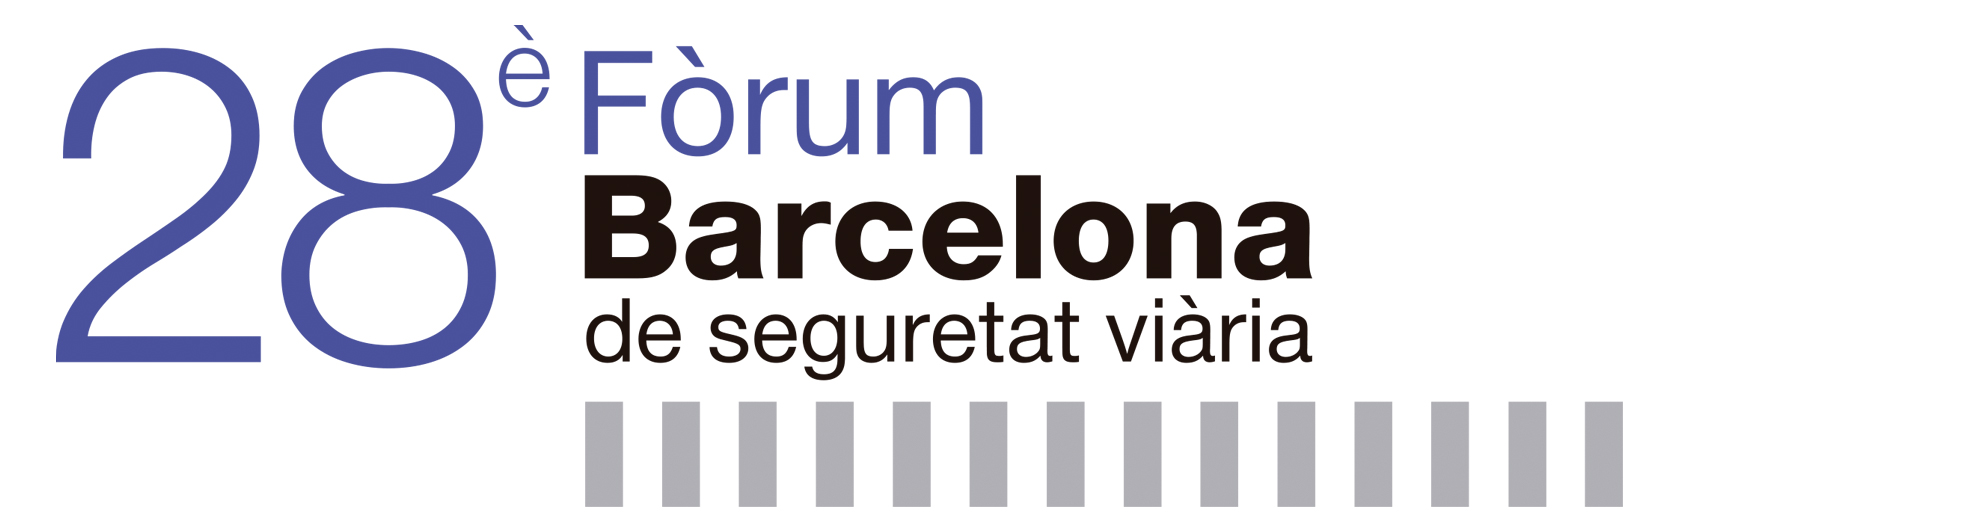 28è Fòrum Barcelona de seguretat viària